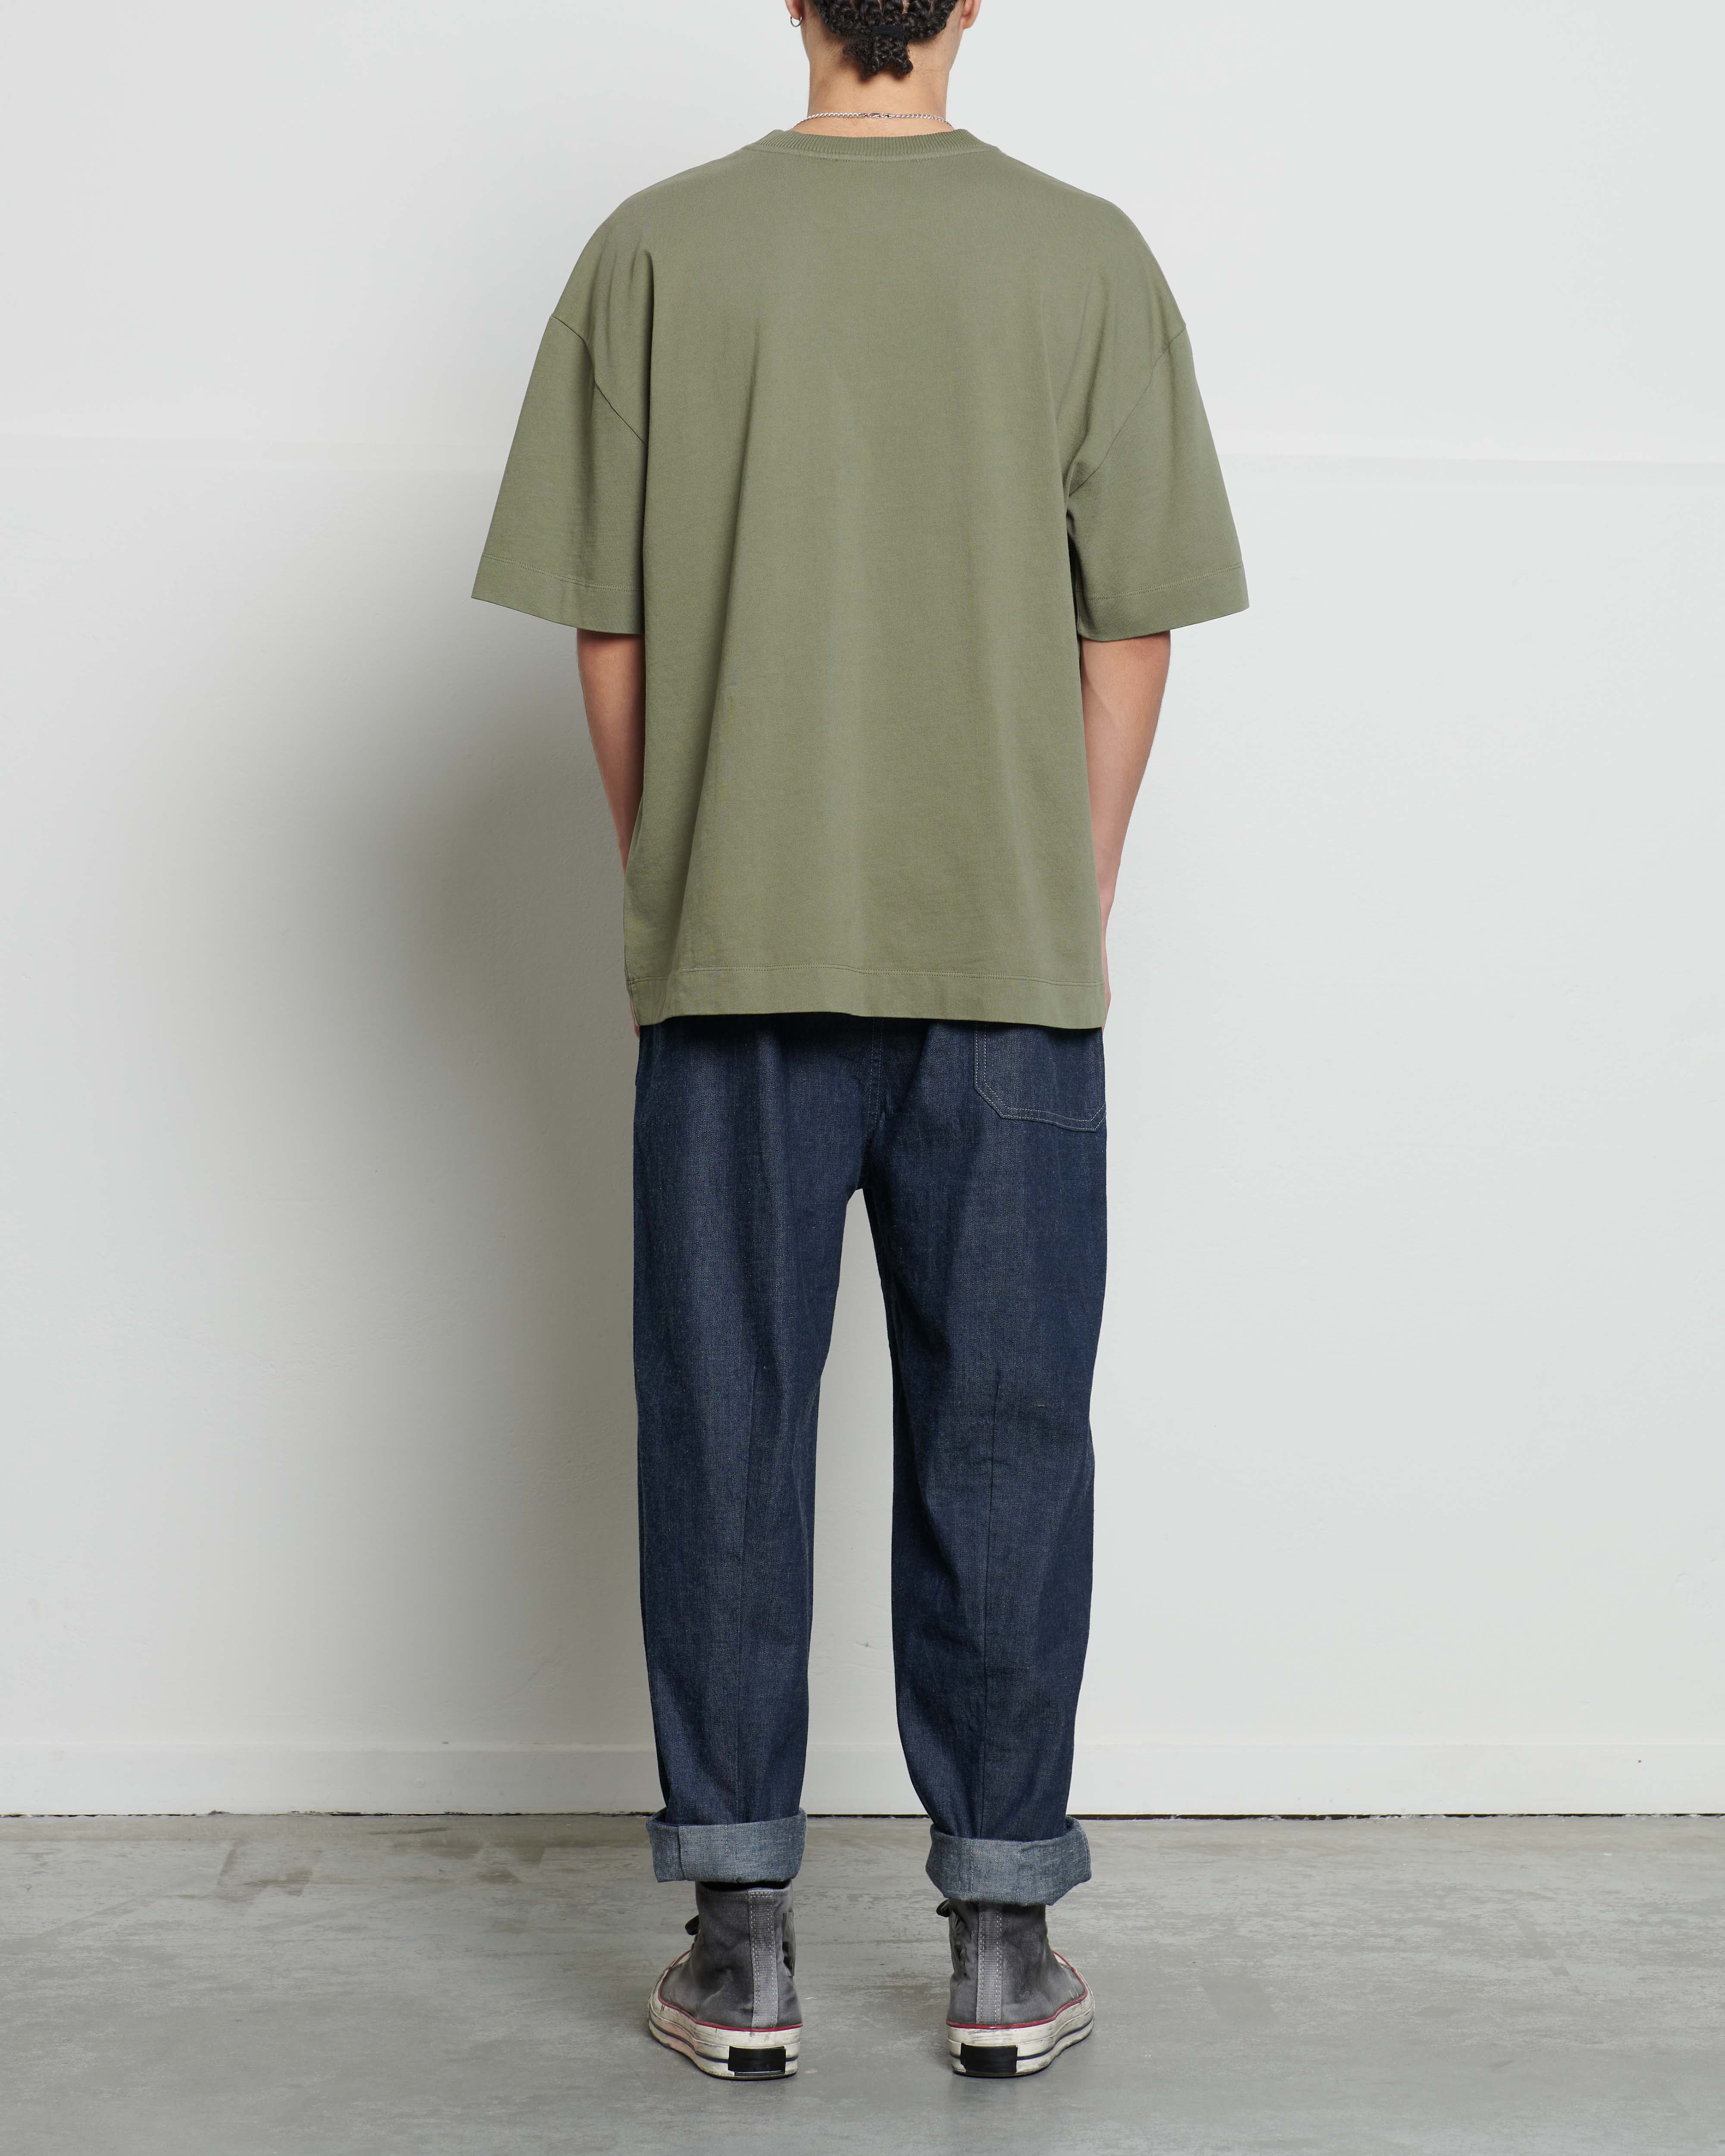 APPLIED ART FORMS Oversize T-Shirt in Dust Green XL